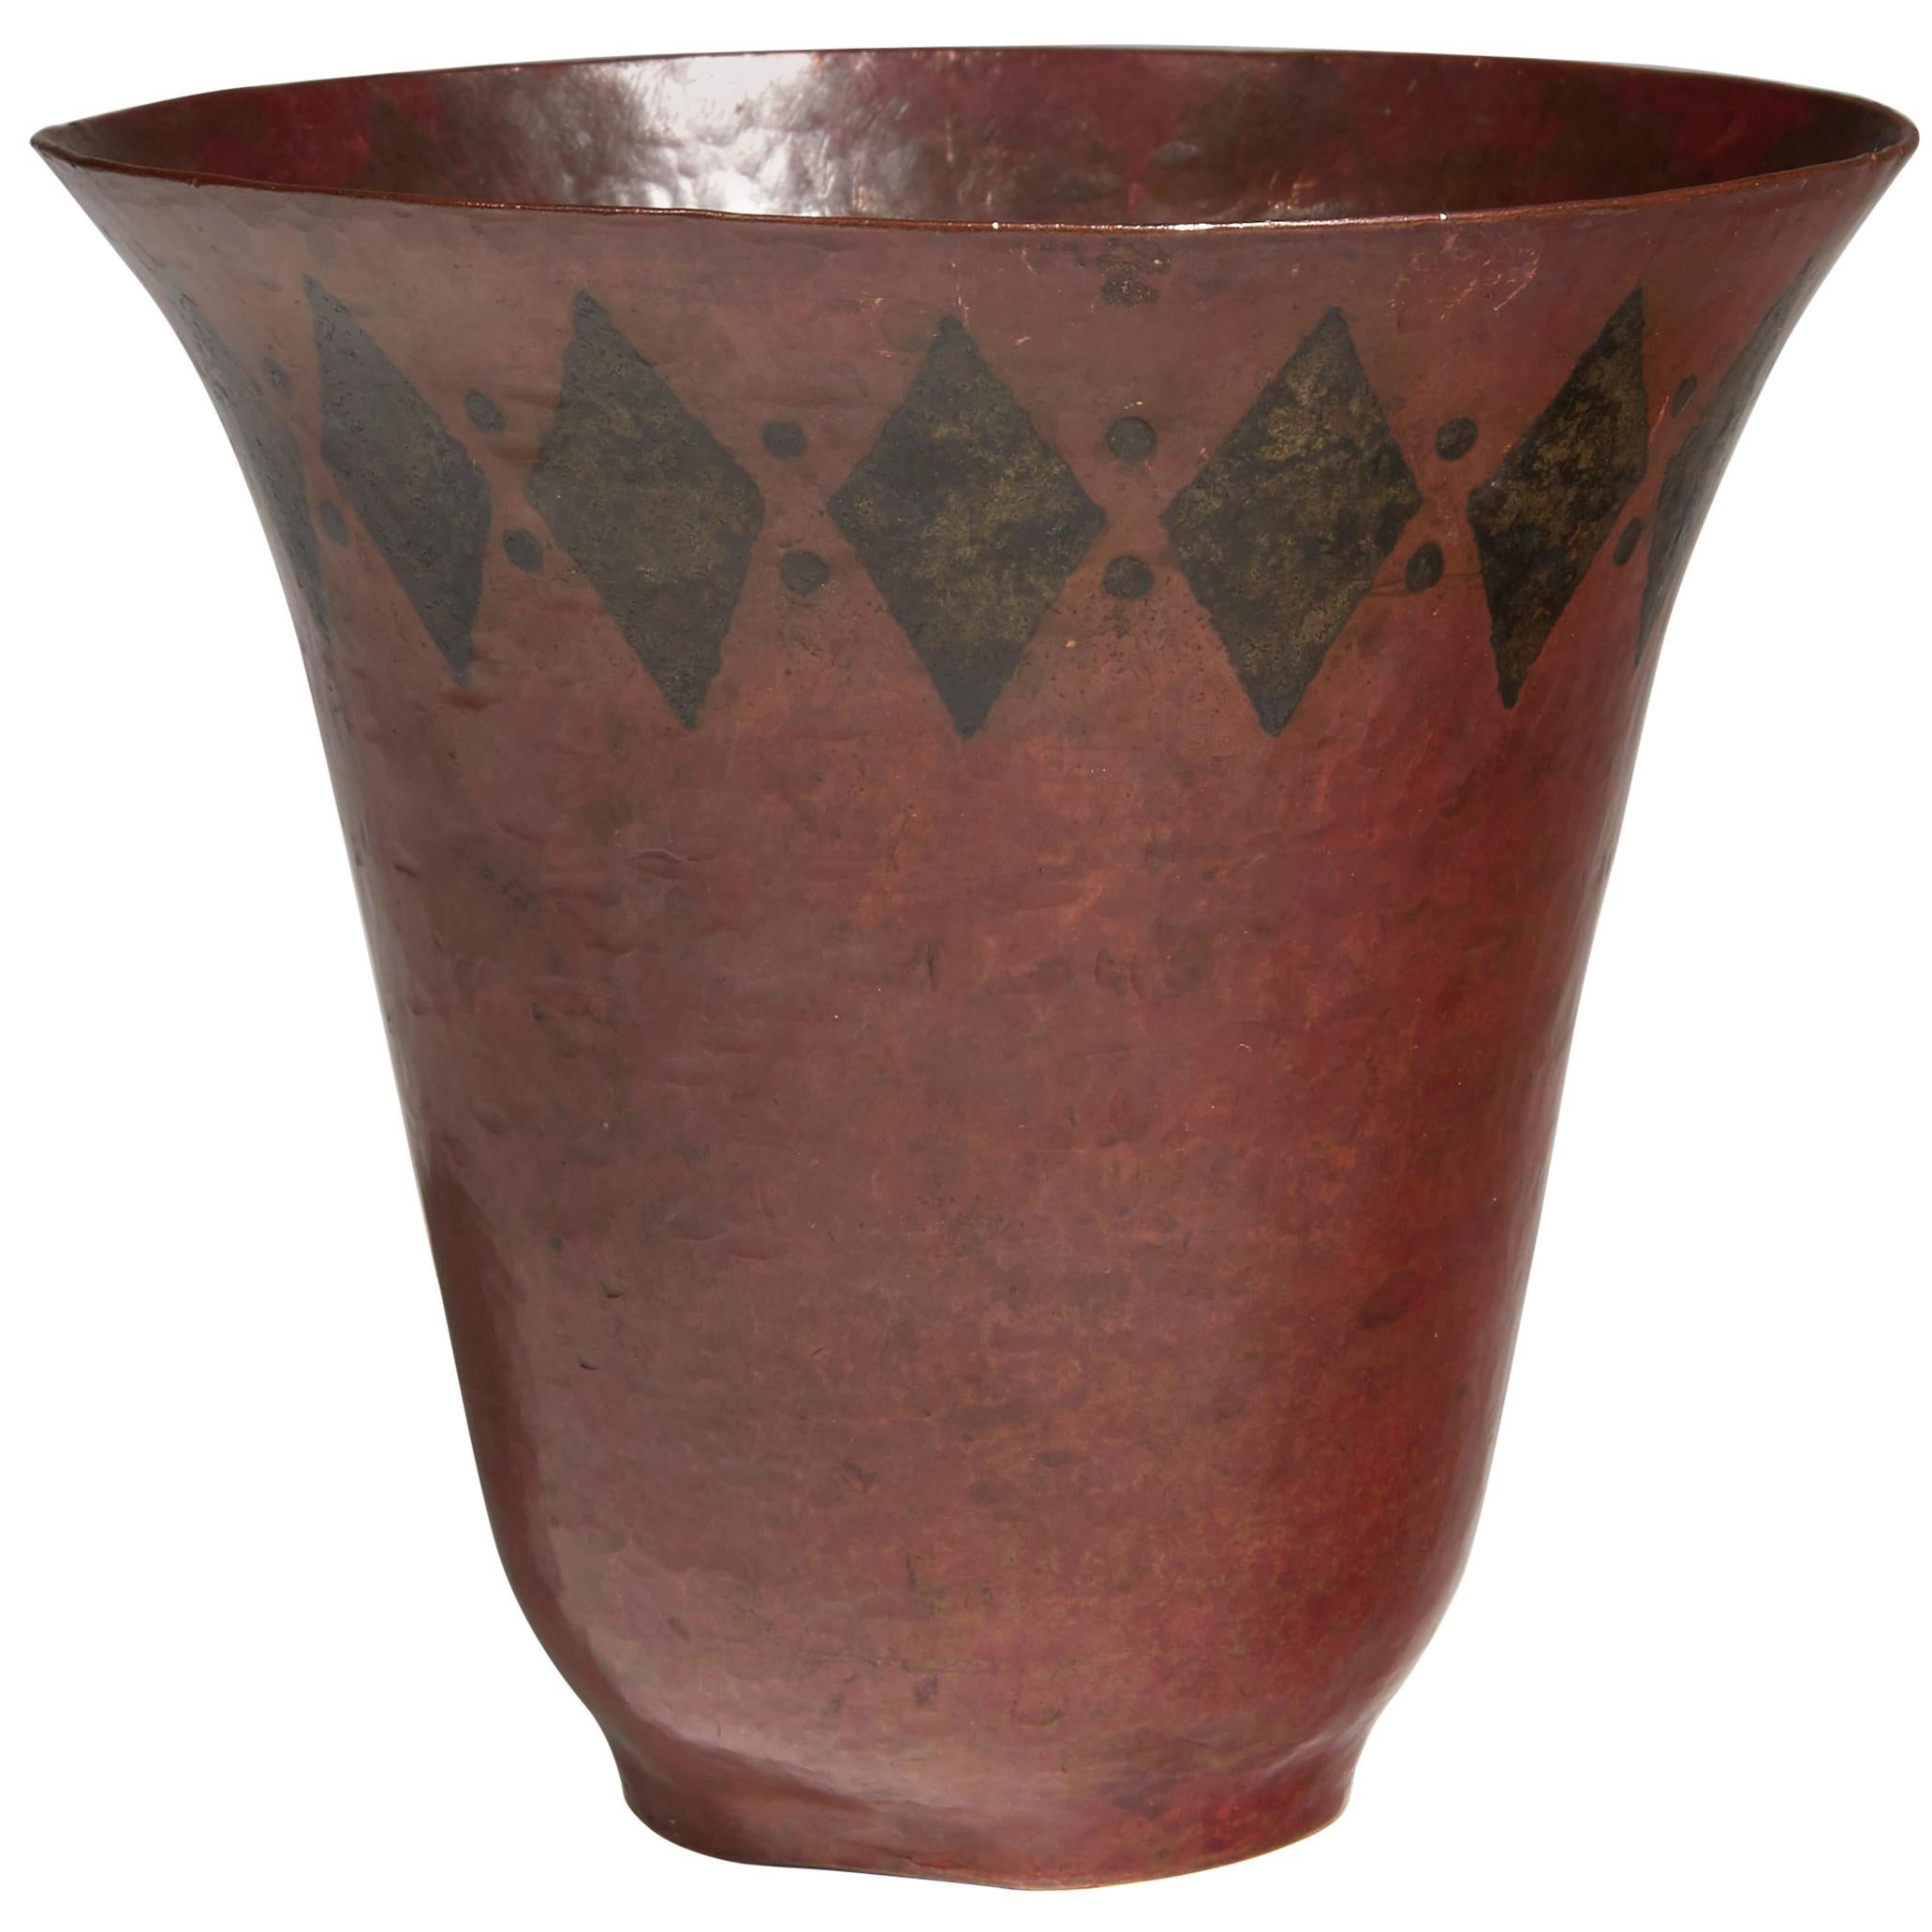 Claudius Linossier, Conical Copperware Vase, circa 1930